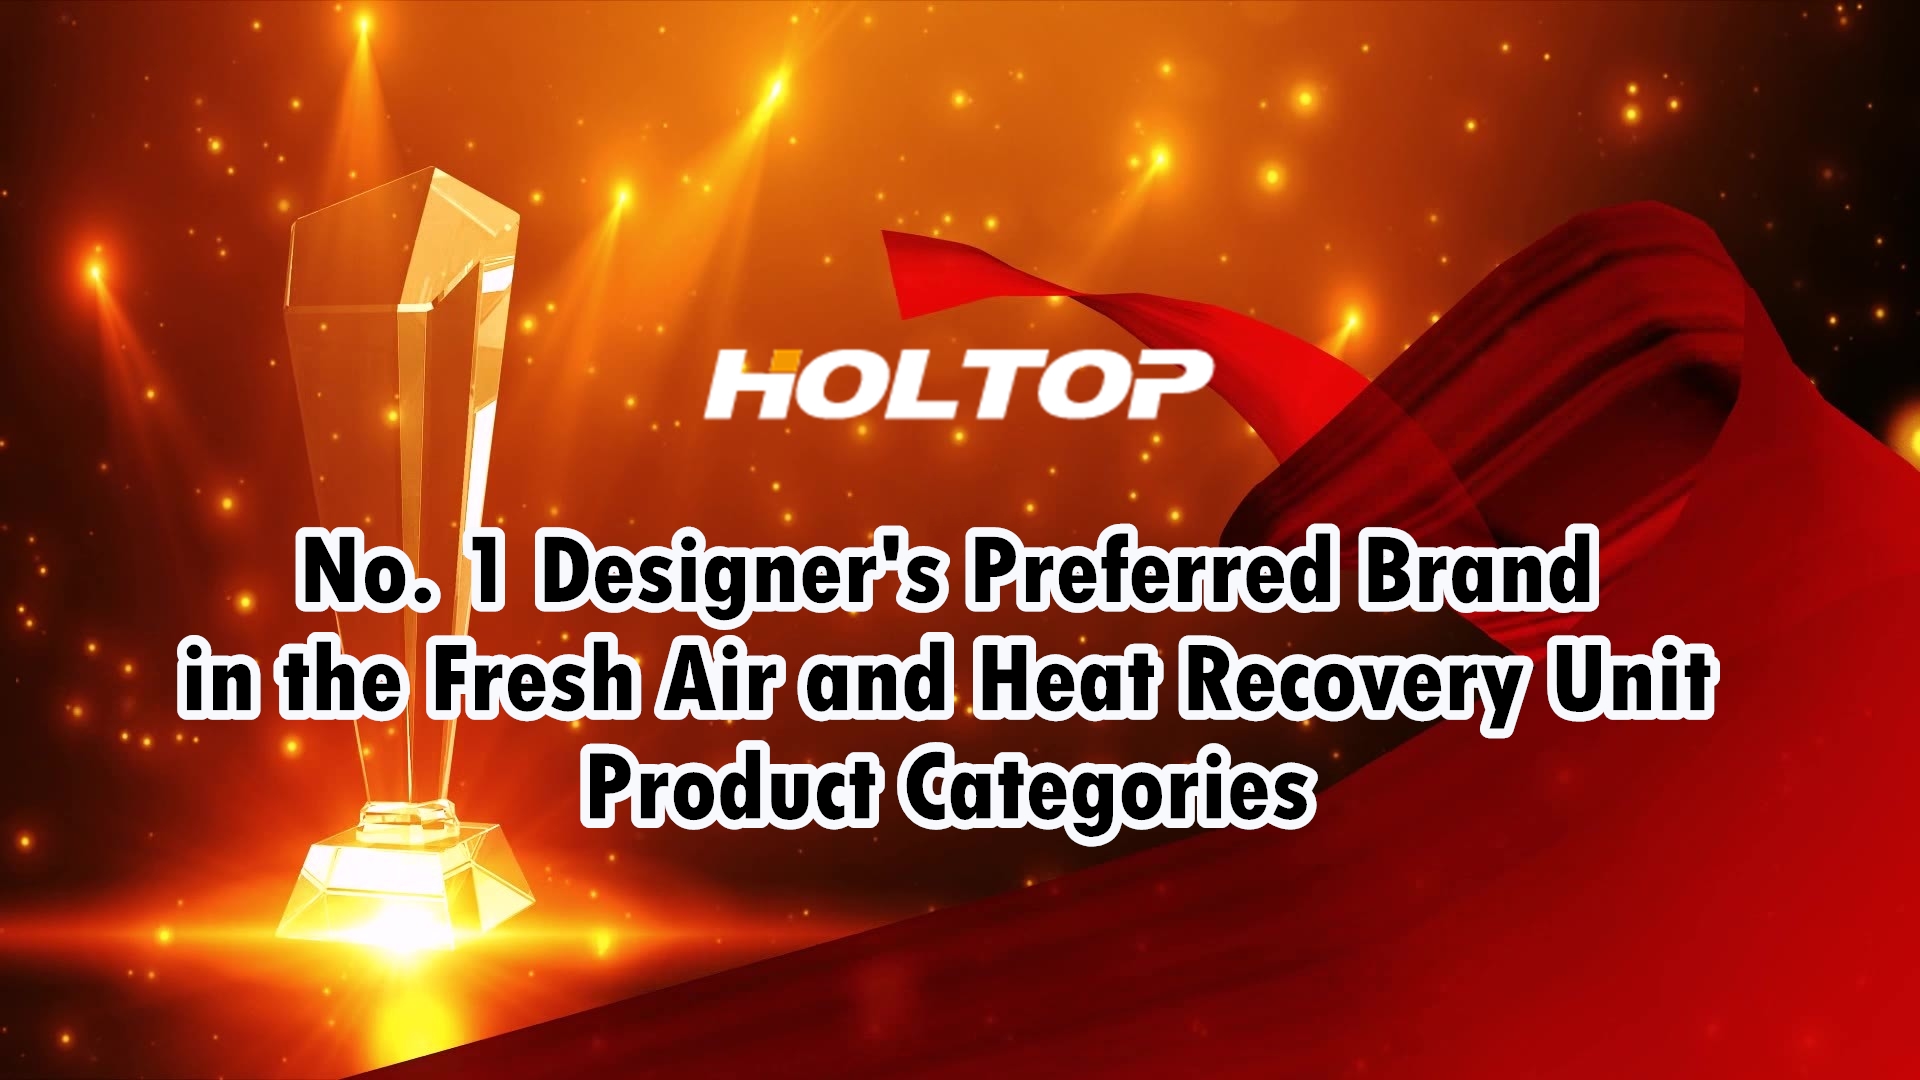 HOLTOP是中国市场新风及热回收机组产品类别中设计师首选品牌第一